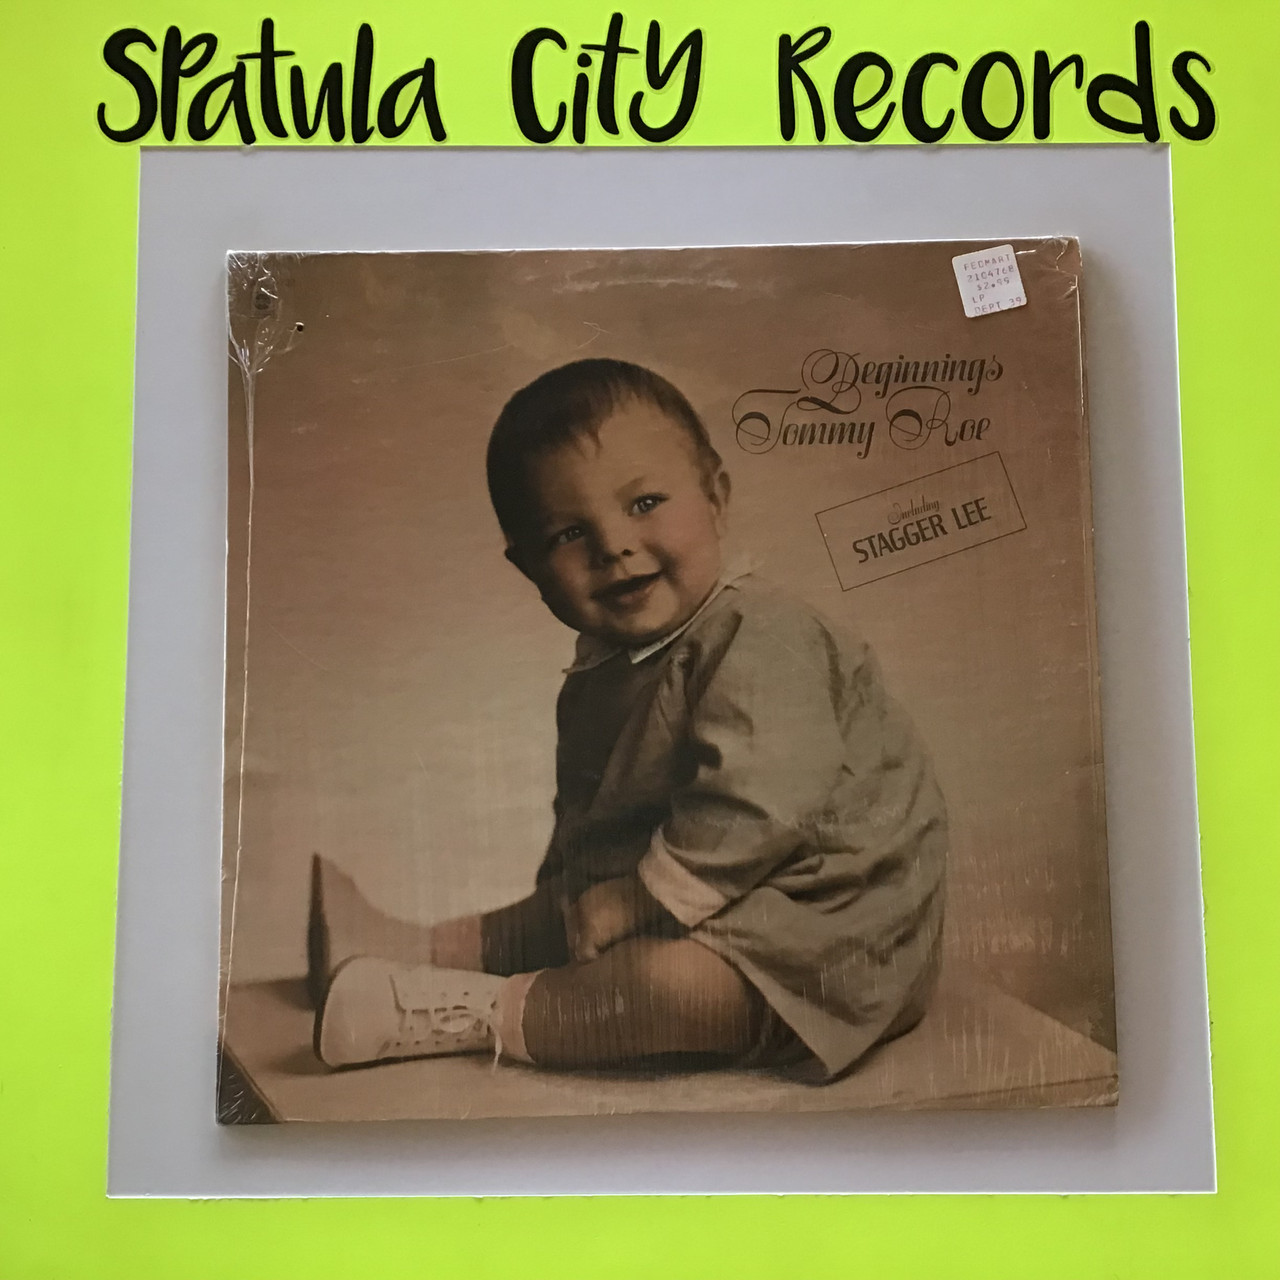 Tommy Roe - Beginnings - vinyl record LP